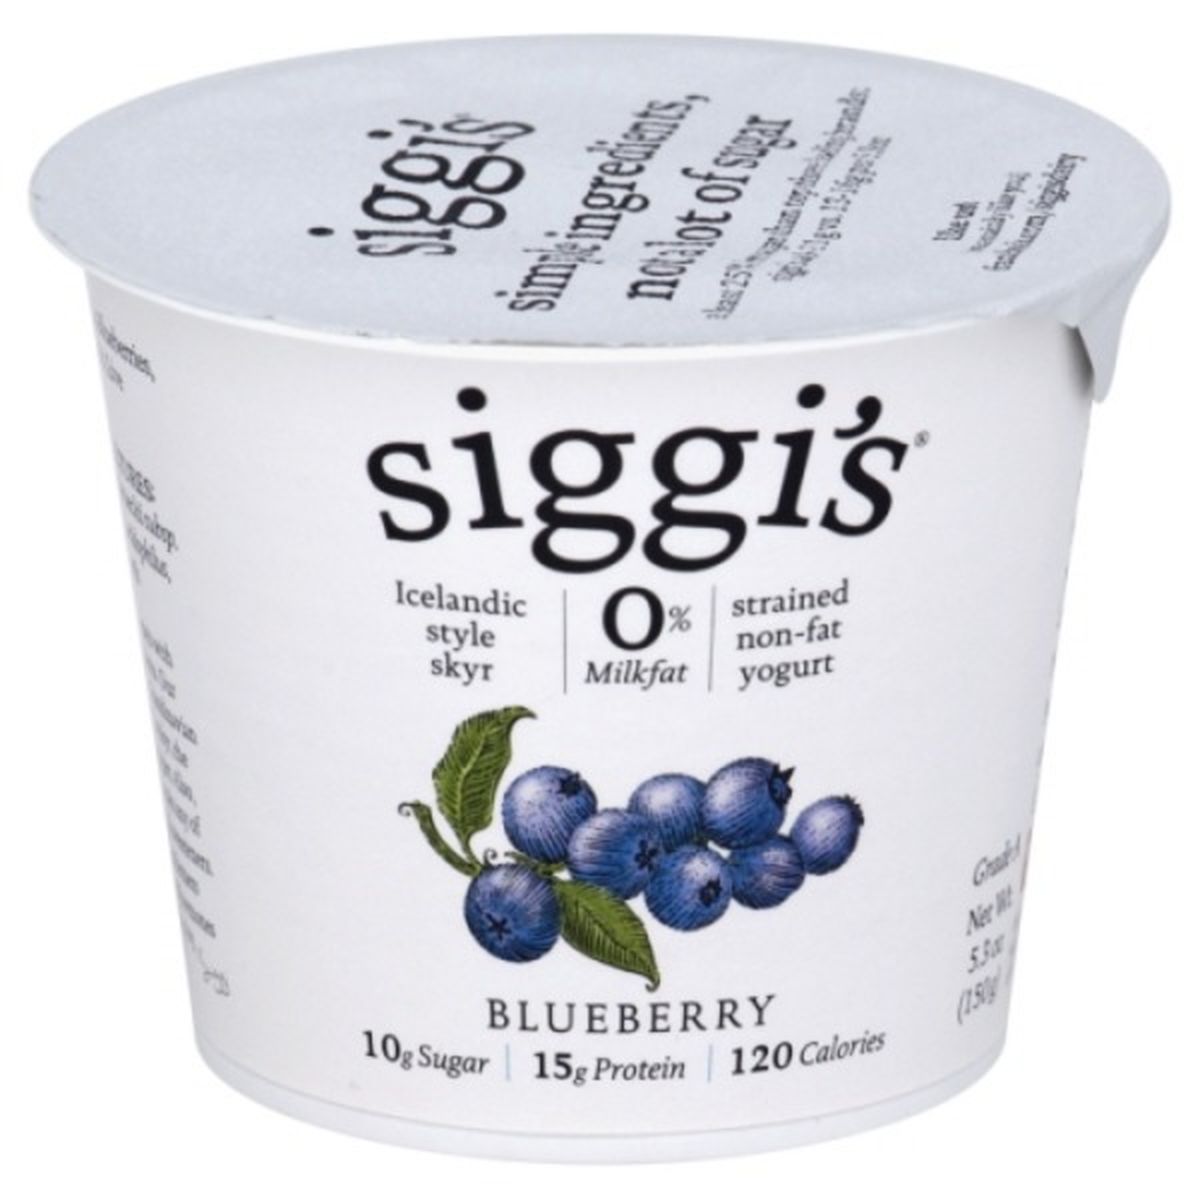 Calories in Siggi's Yogurt, Non-Fat, Icelandic Style Skyr, Strained, Blueberry